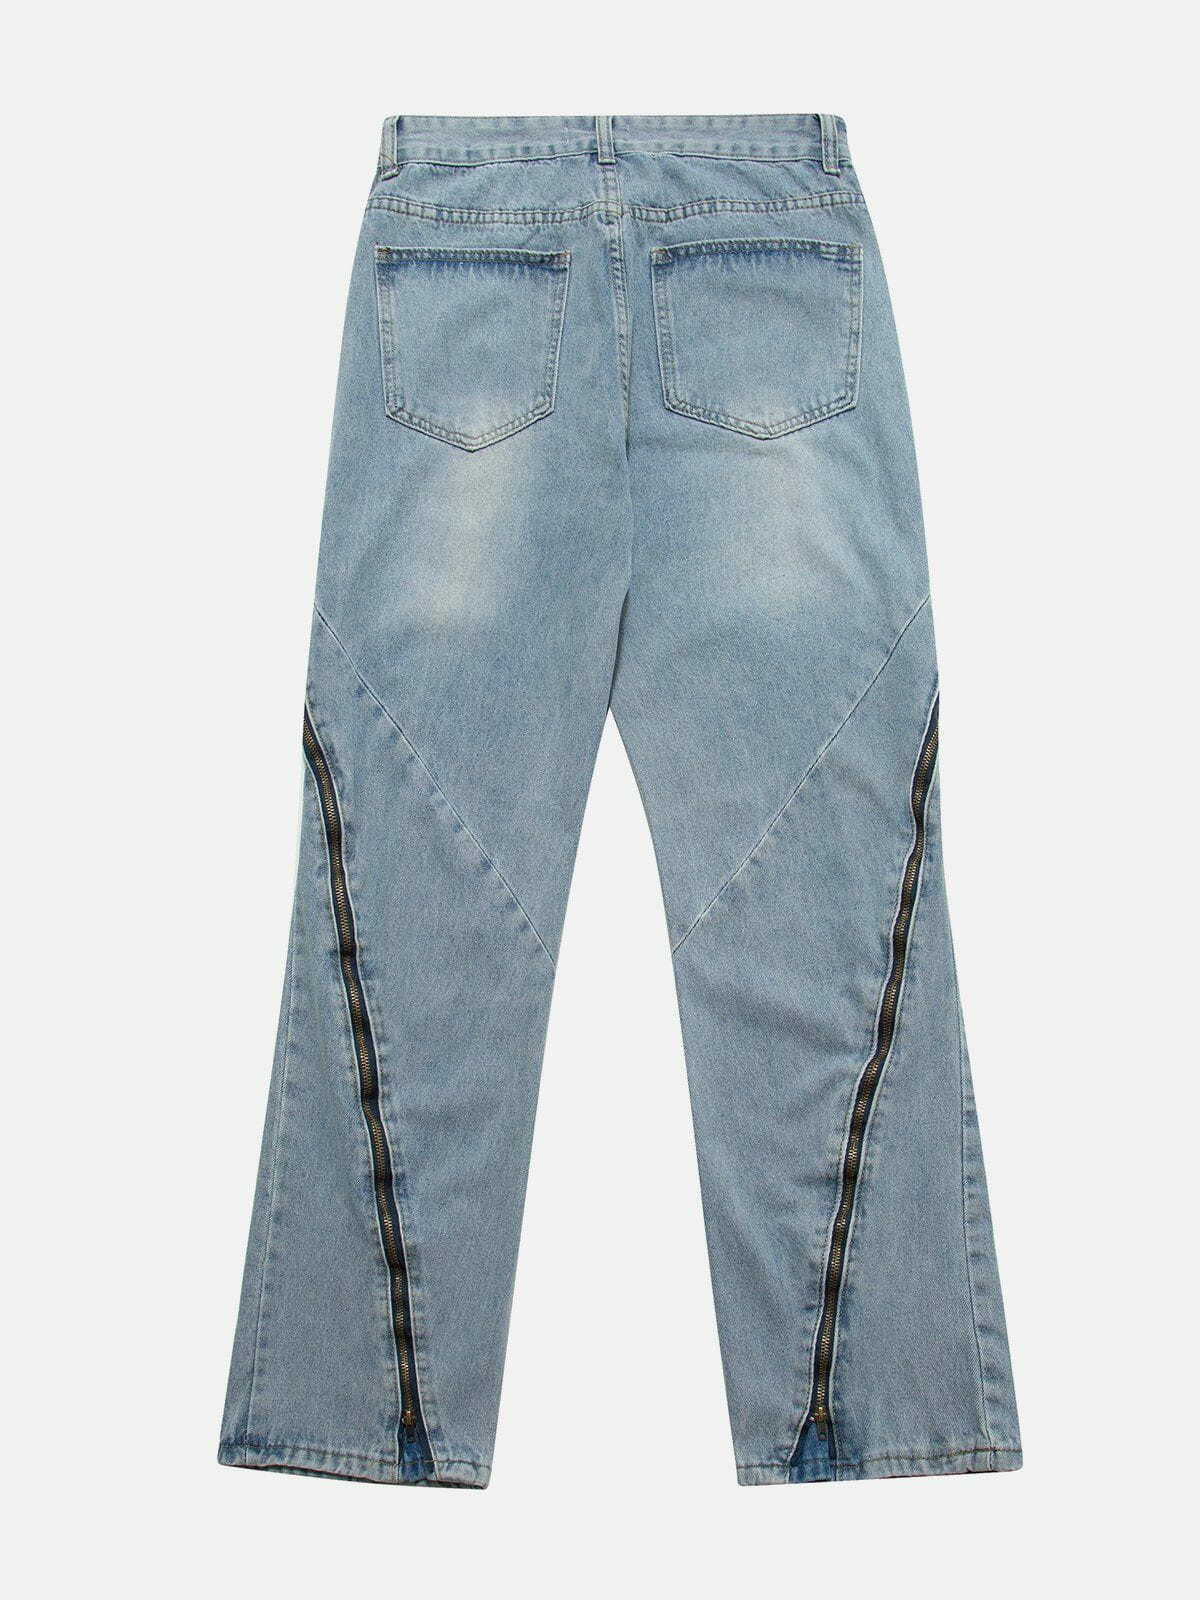 retro wash zip jeans adjustable fit & vintage vibes 8991